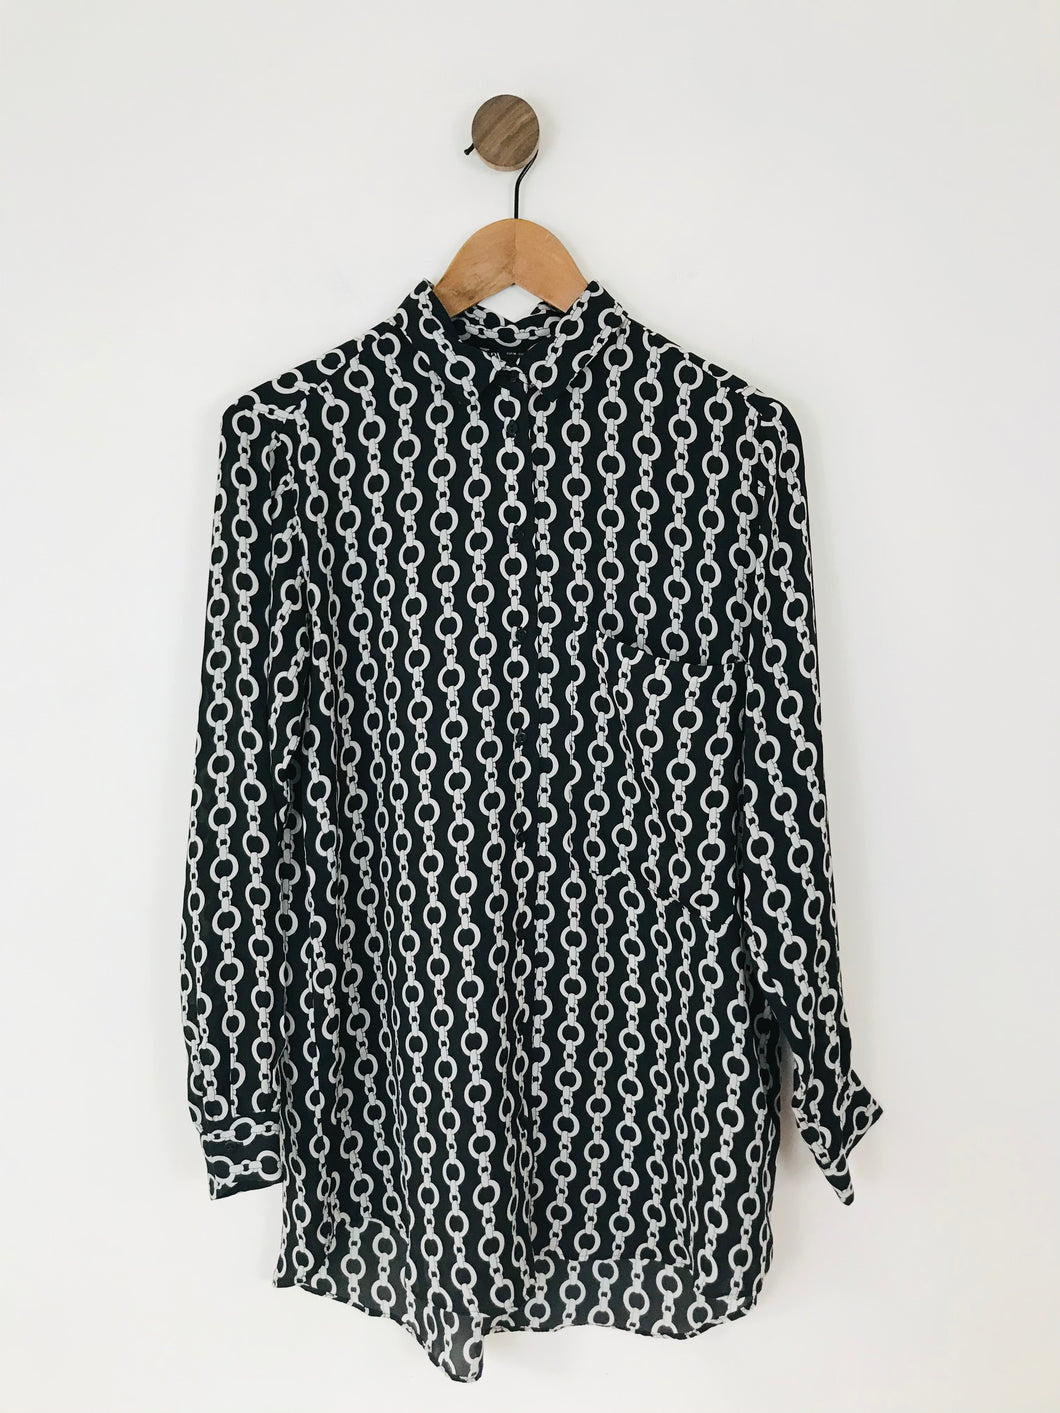 Zara Women’s Chain Print Long Sleeve Shirt | M UK10-12 | Black White